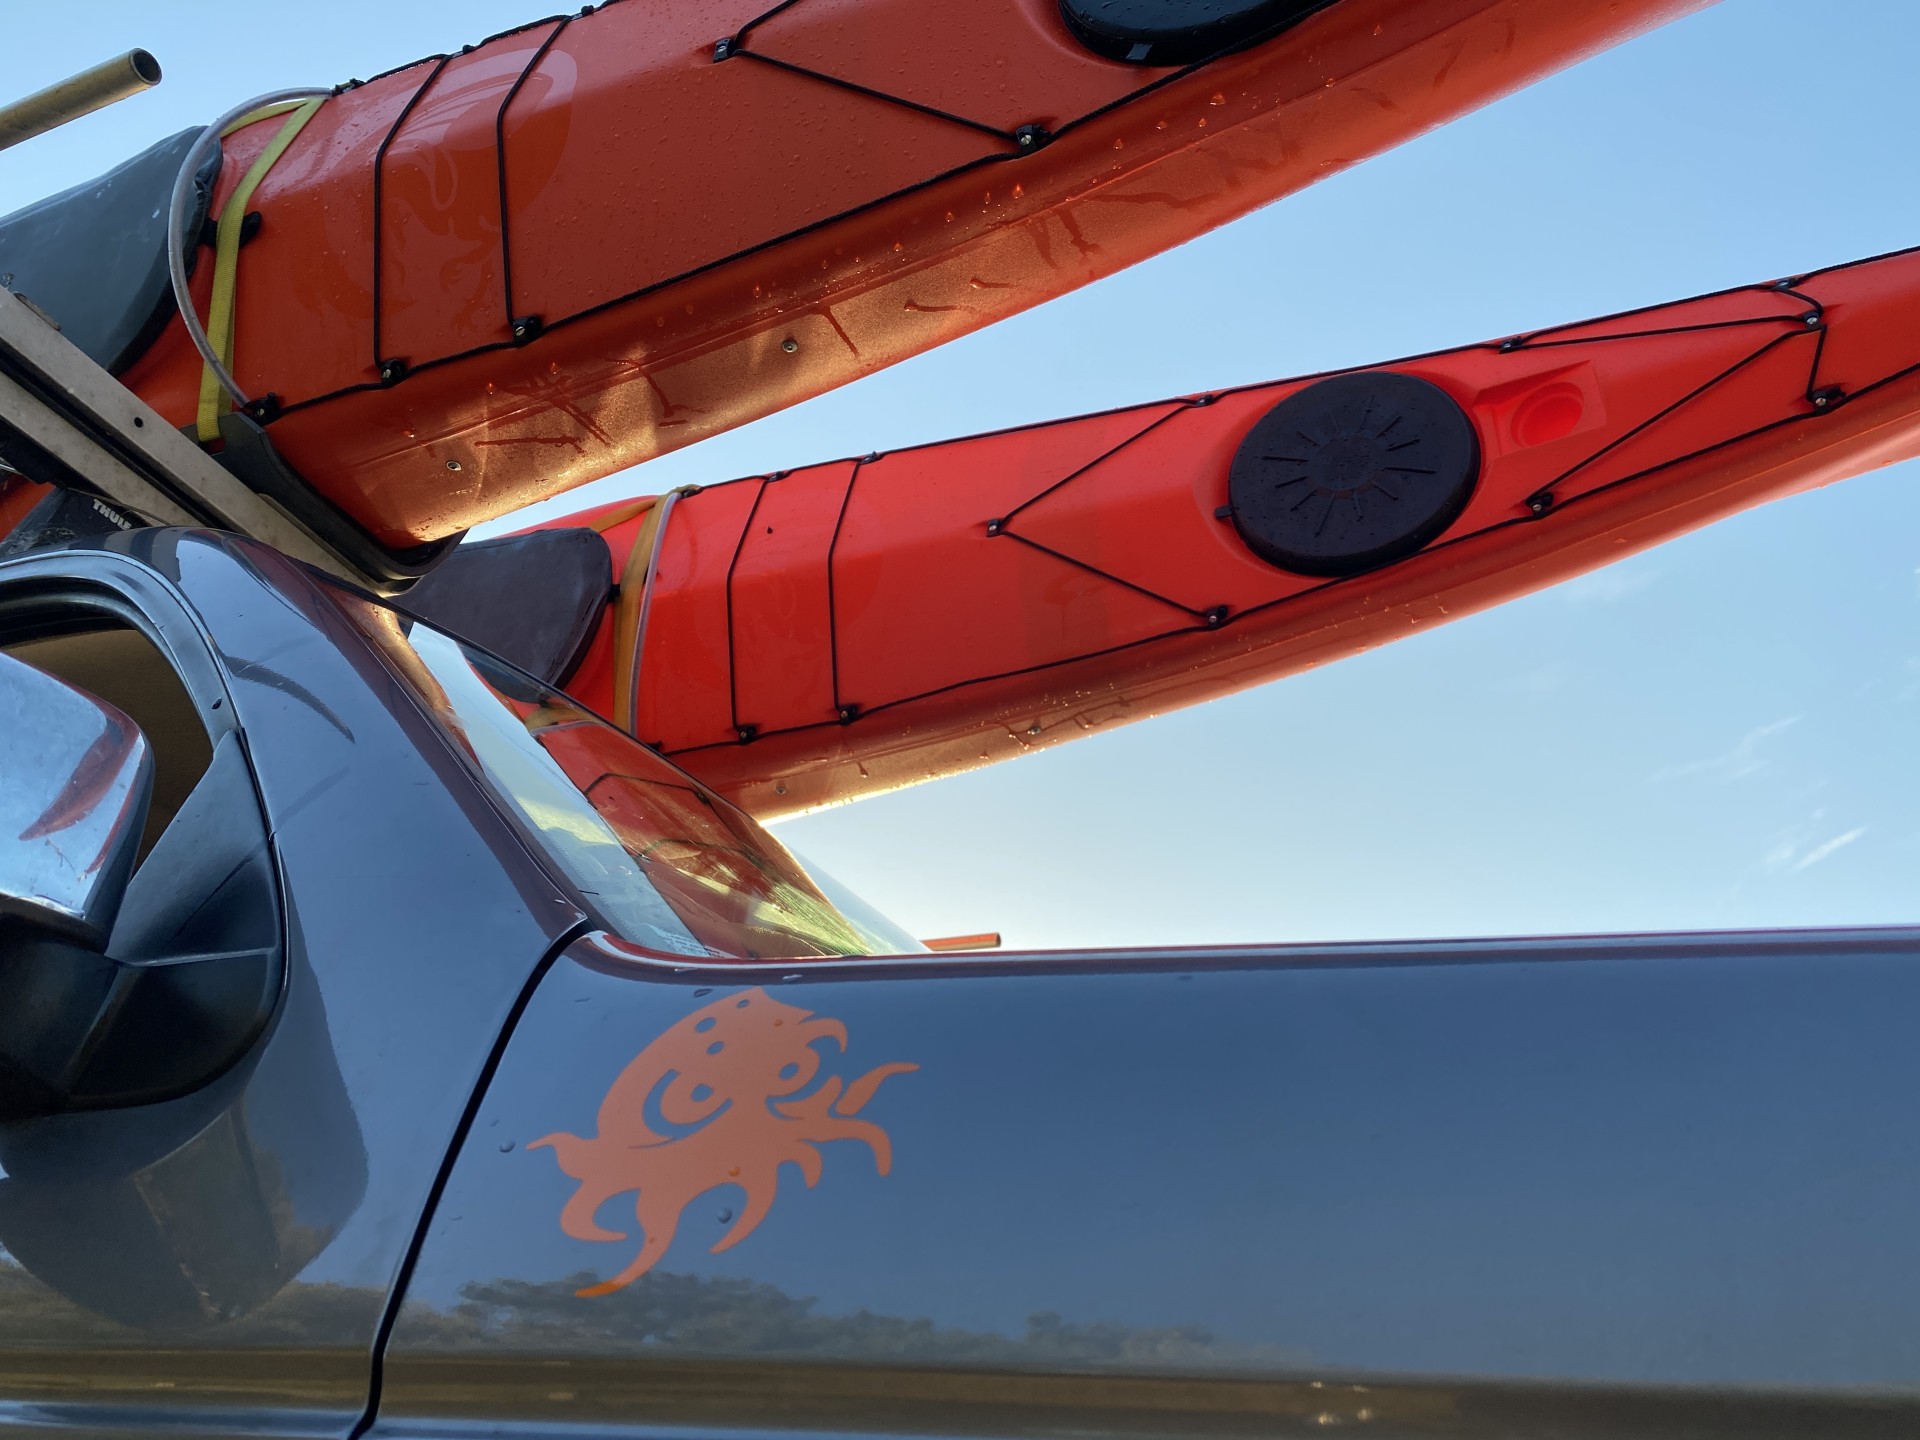 Sea kayaks on a roof rack with NOMAD Sea Kayaking.